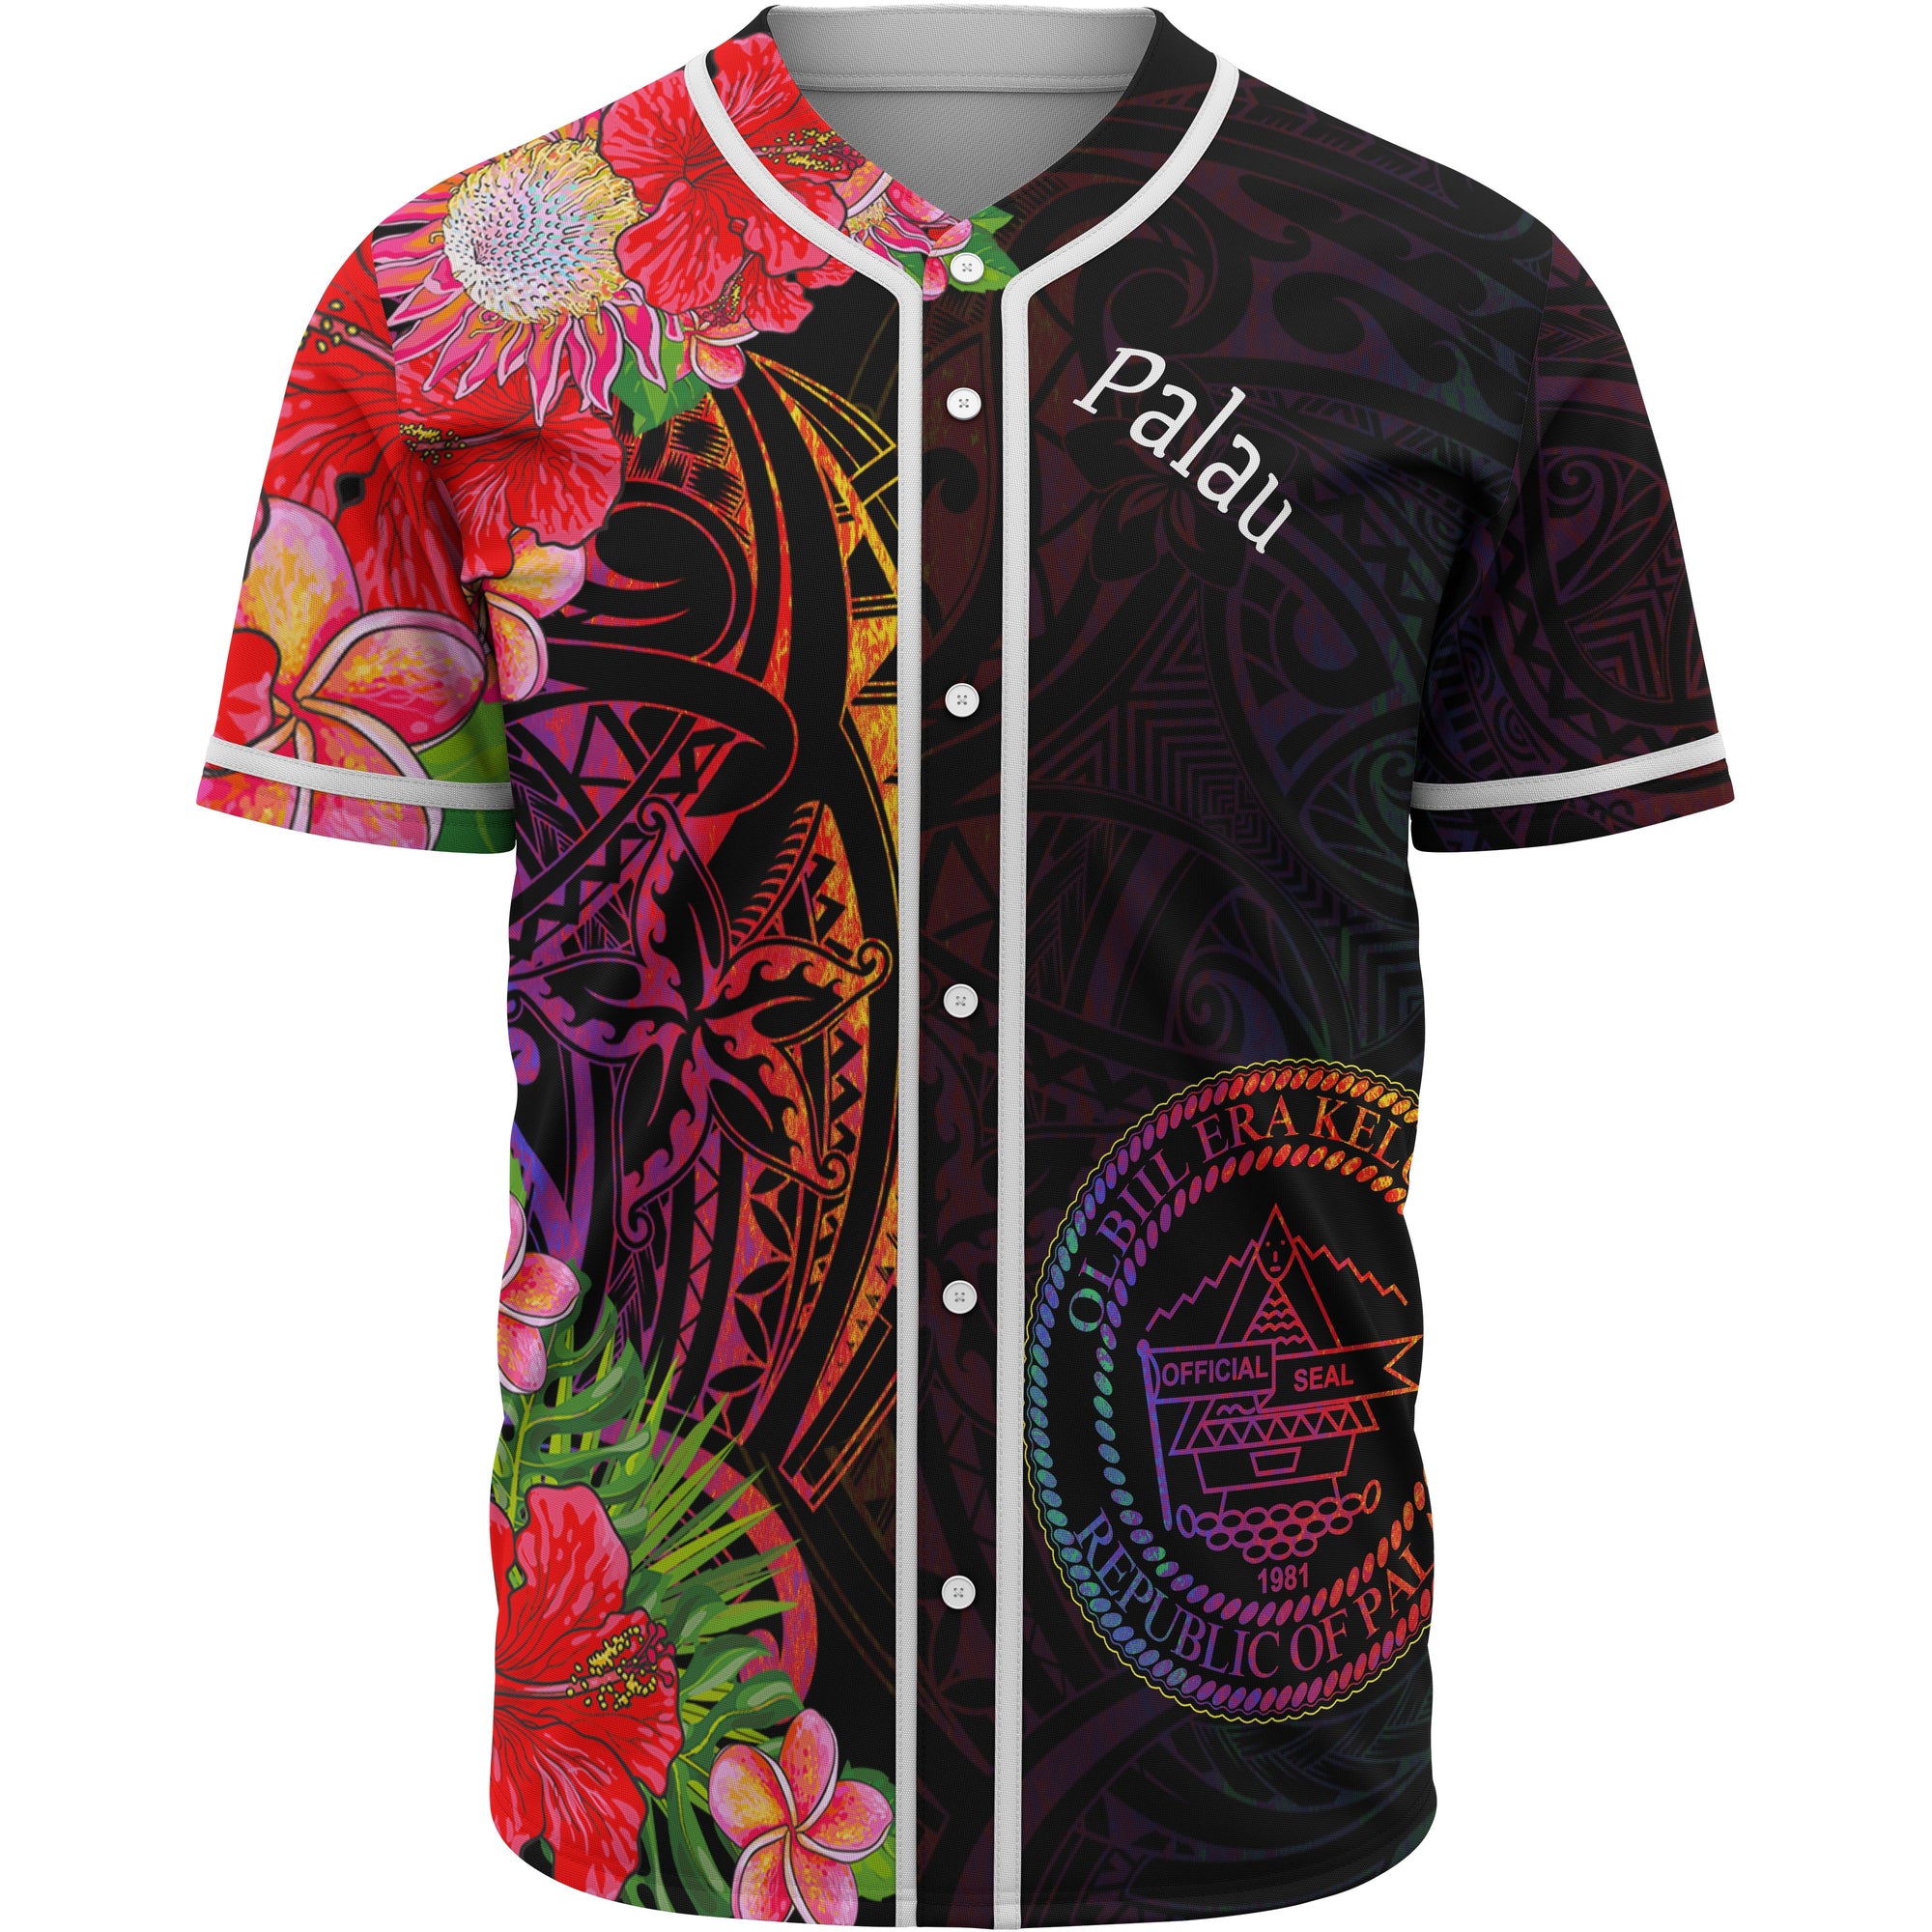 Palau Baseball Shirt - Tropical Hippie Style Unisex Black - Polynesian Pride